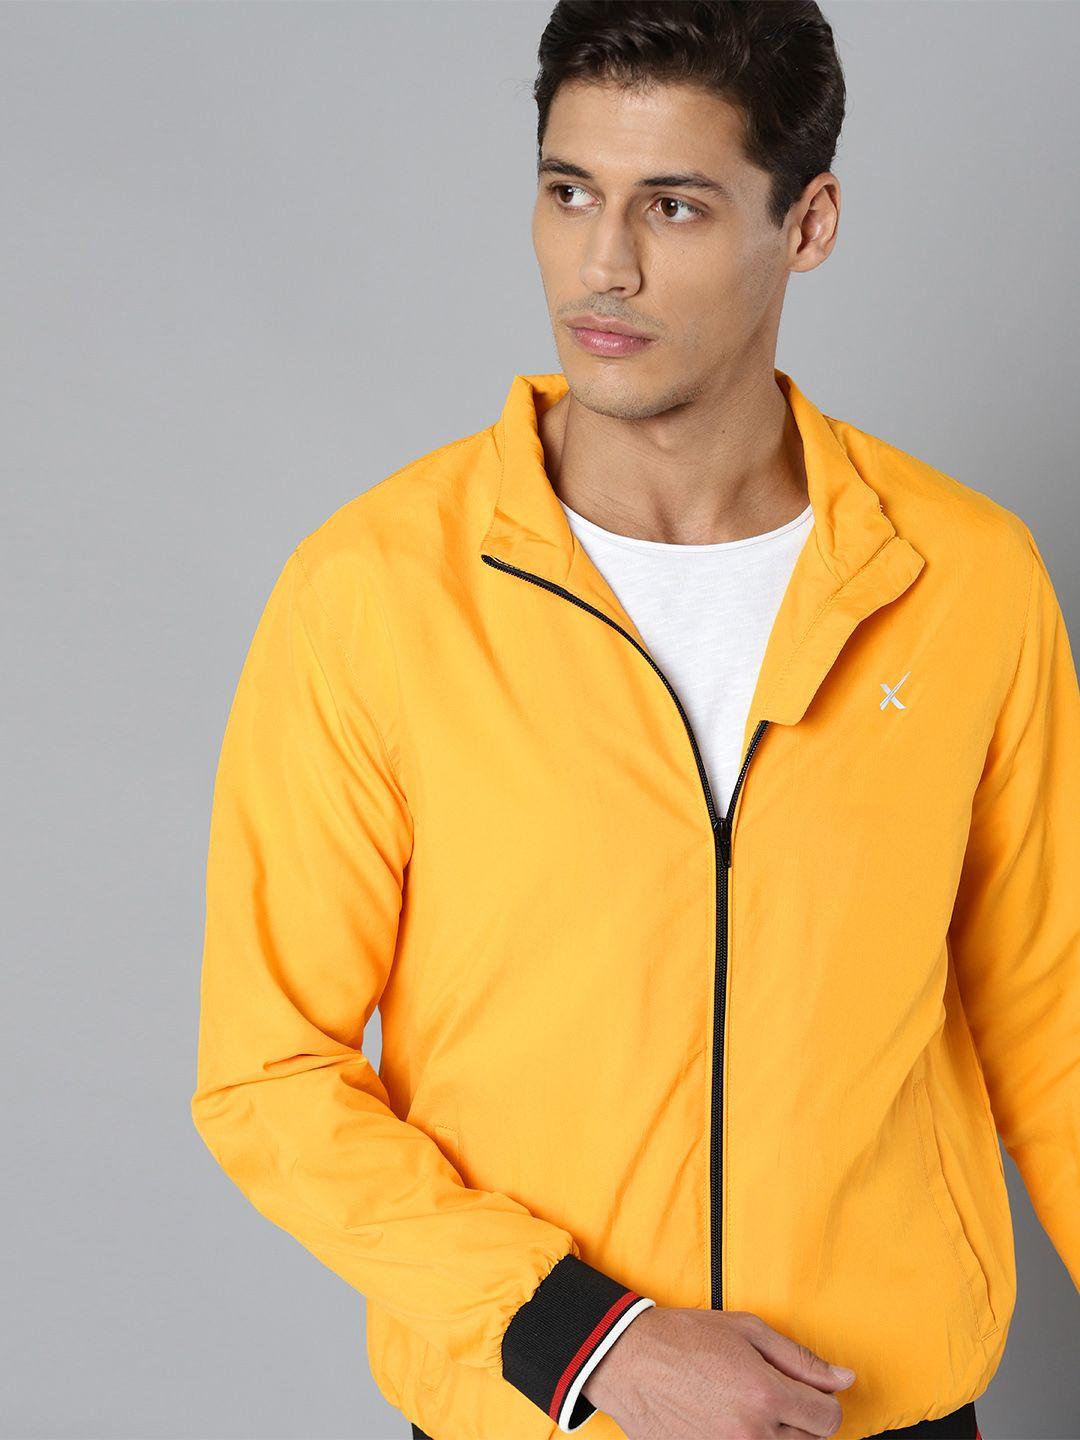 hrx by hrithik roshan lifestyle men electric kumquat rapid-dry solid jacket